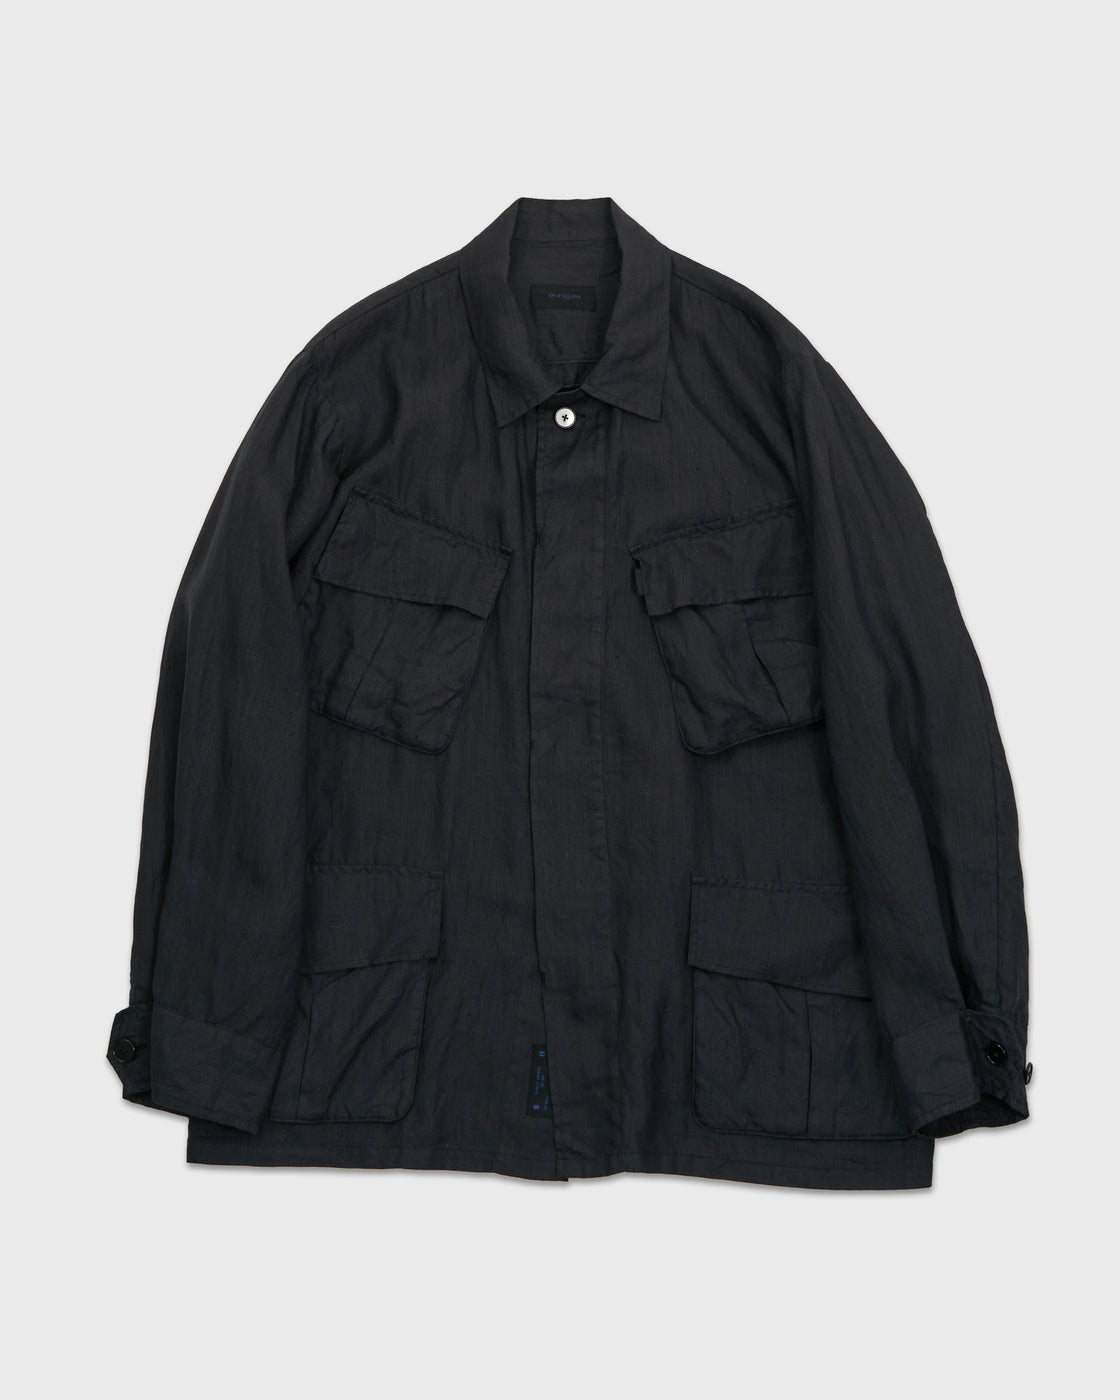 SH FTGJ-004 Fatigue Shirt (Linen Garment Dye), Ink Black